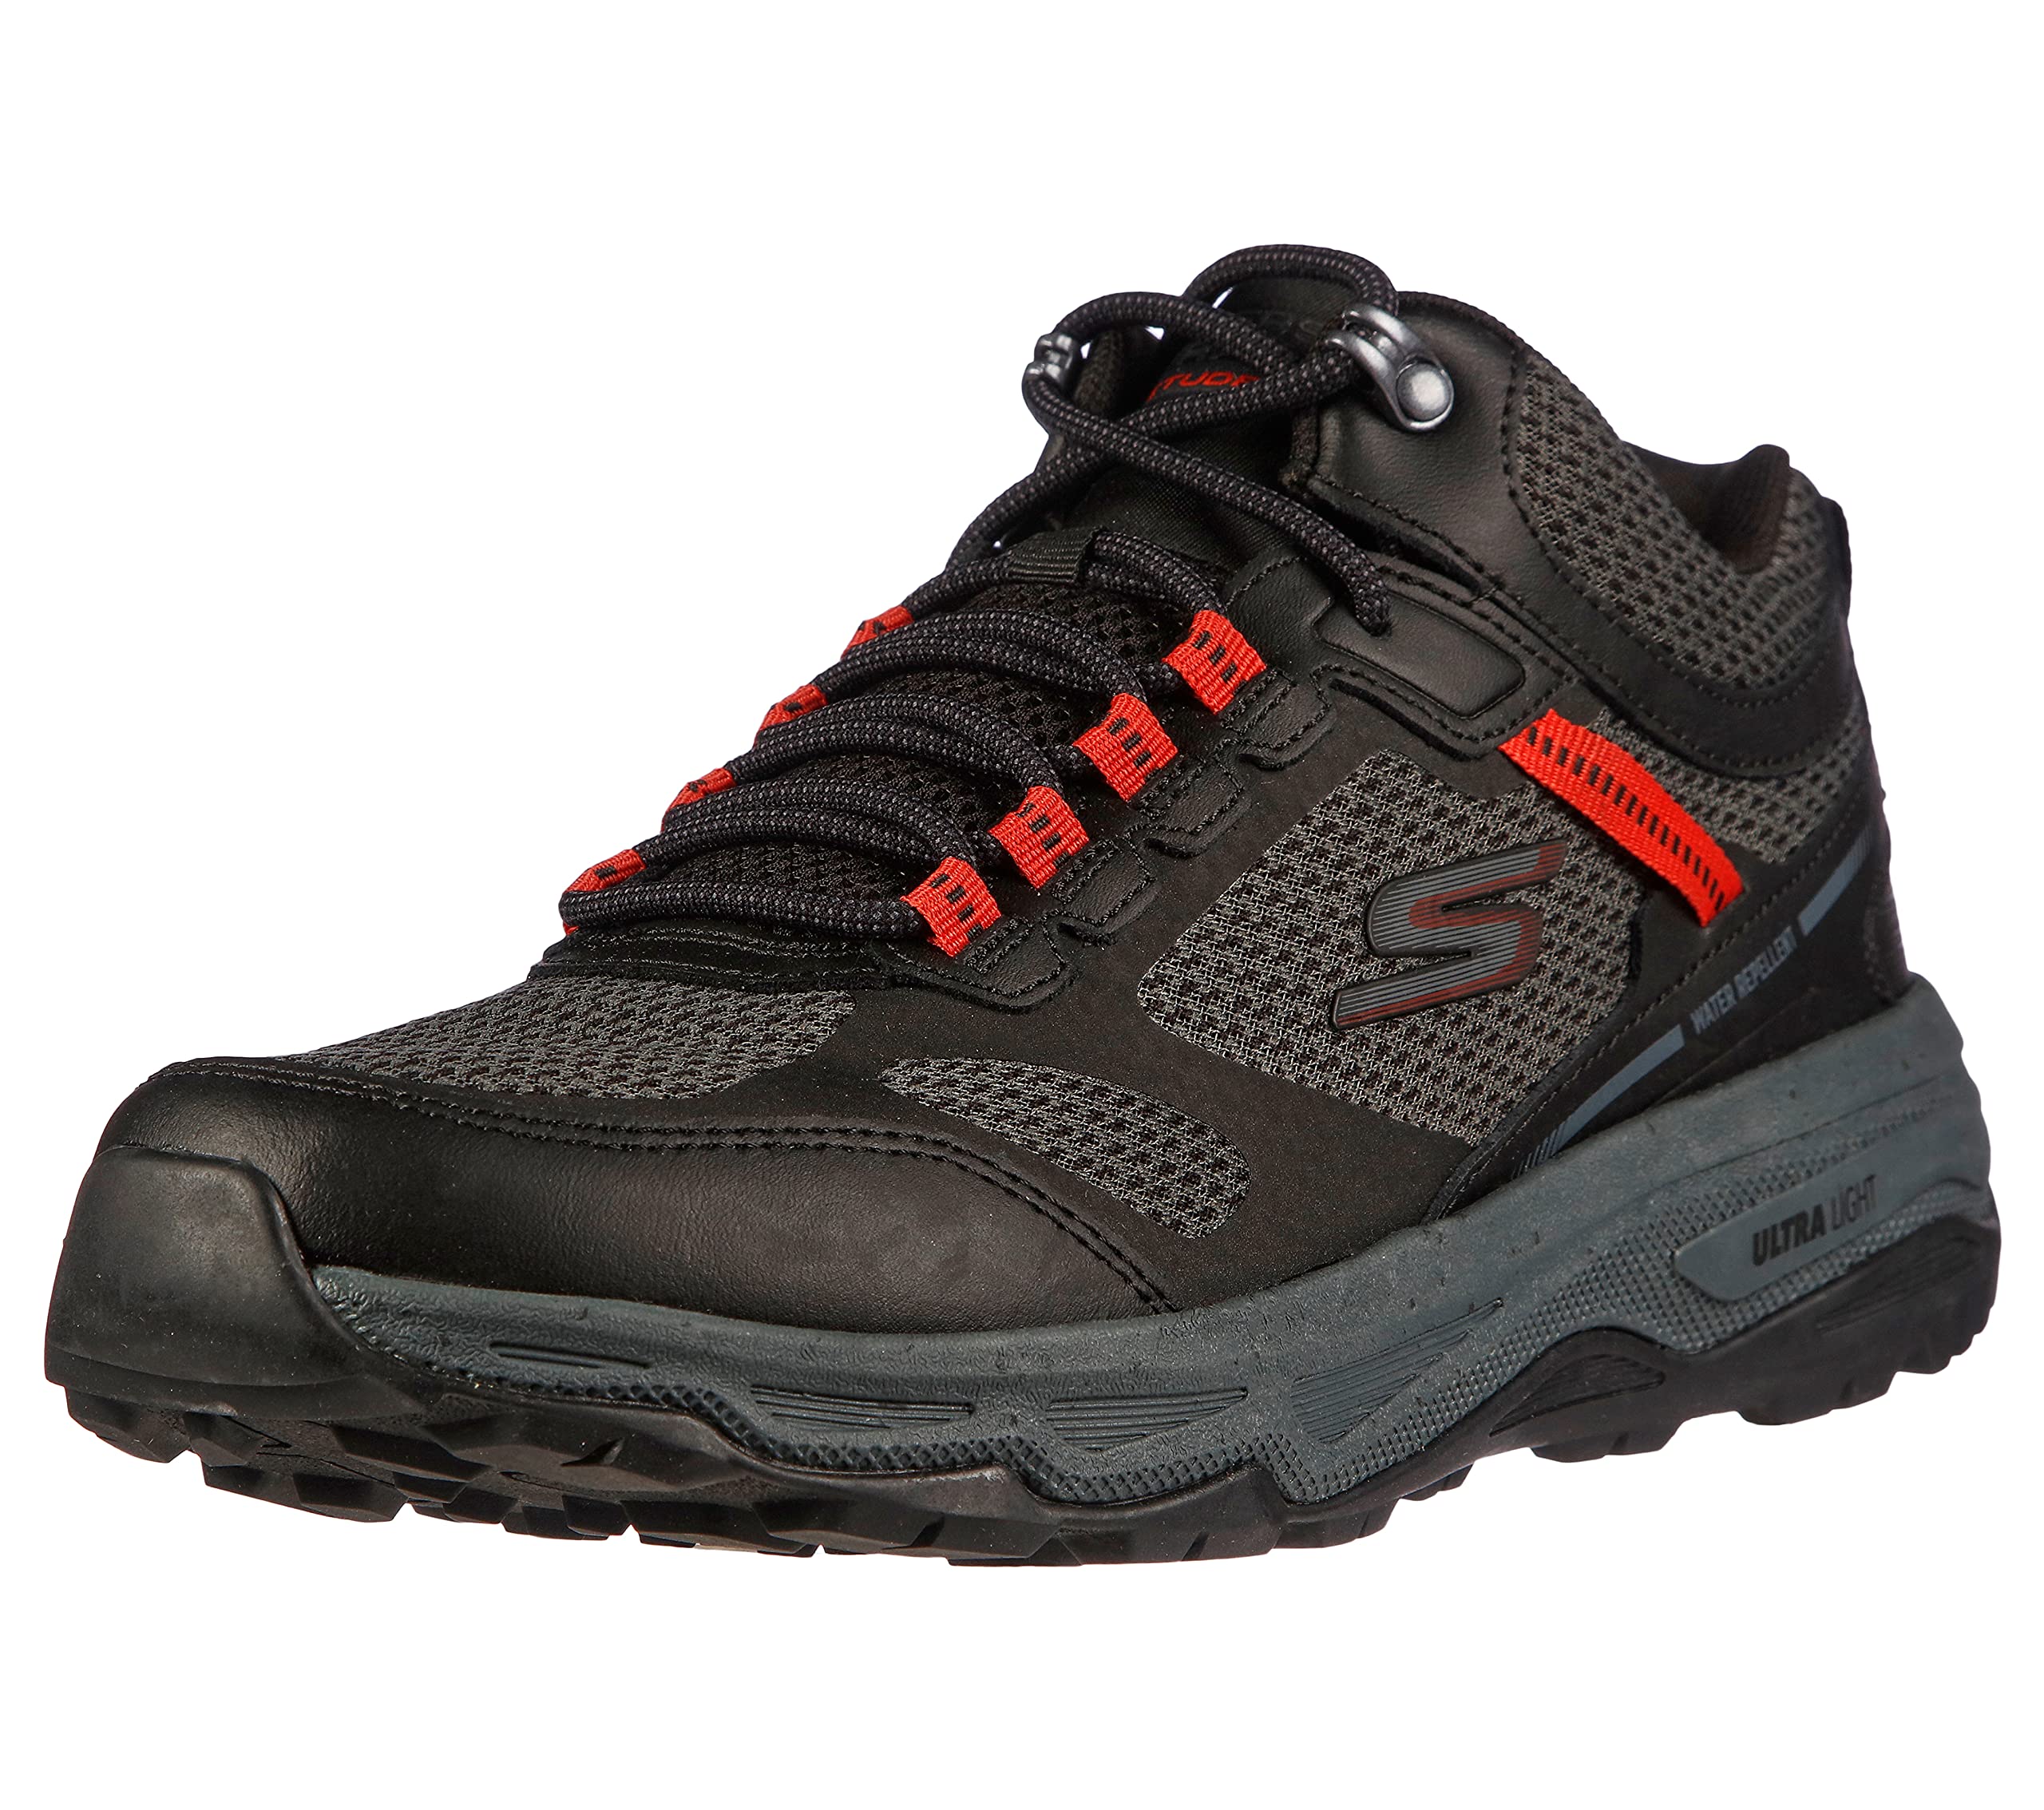 Skechers Men's Go Run Altitude Trail Running Shoes (Black/Charcoal) $37.50 + Free Shipping